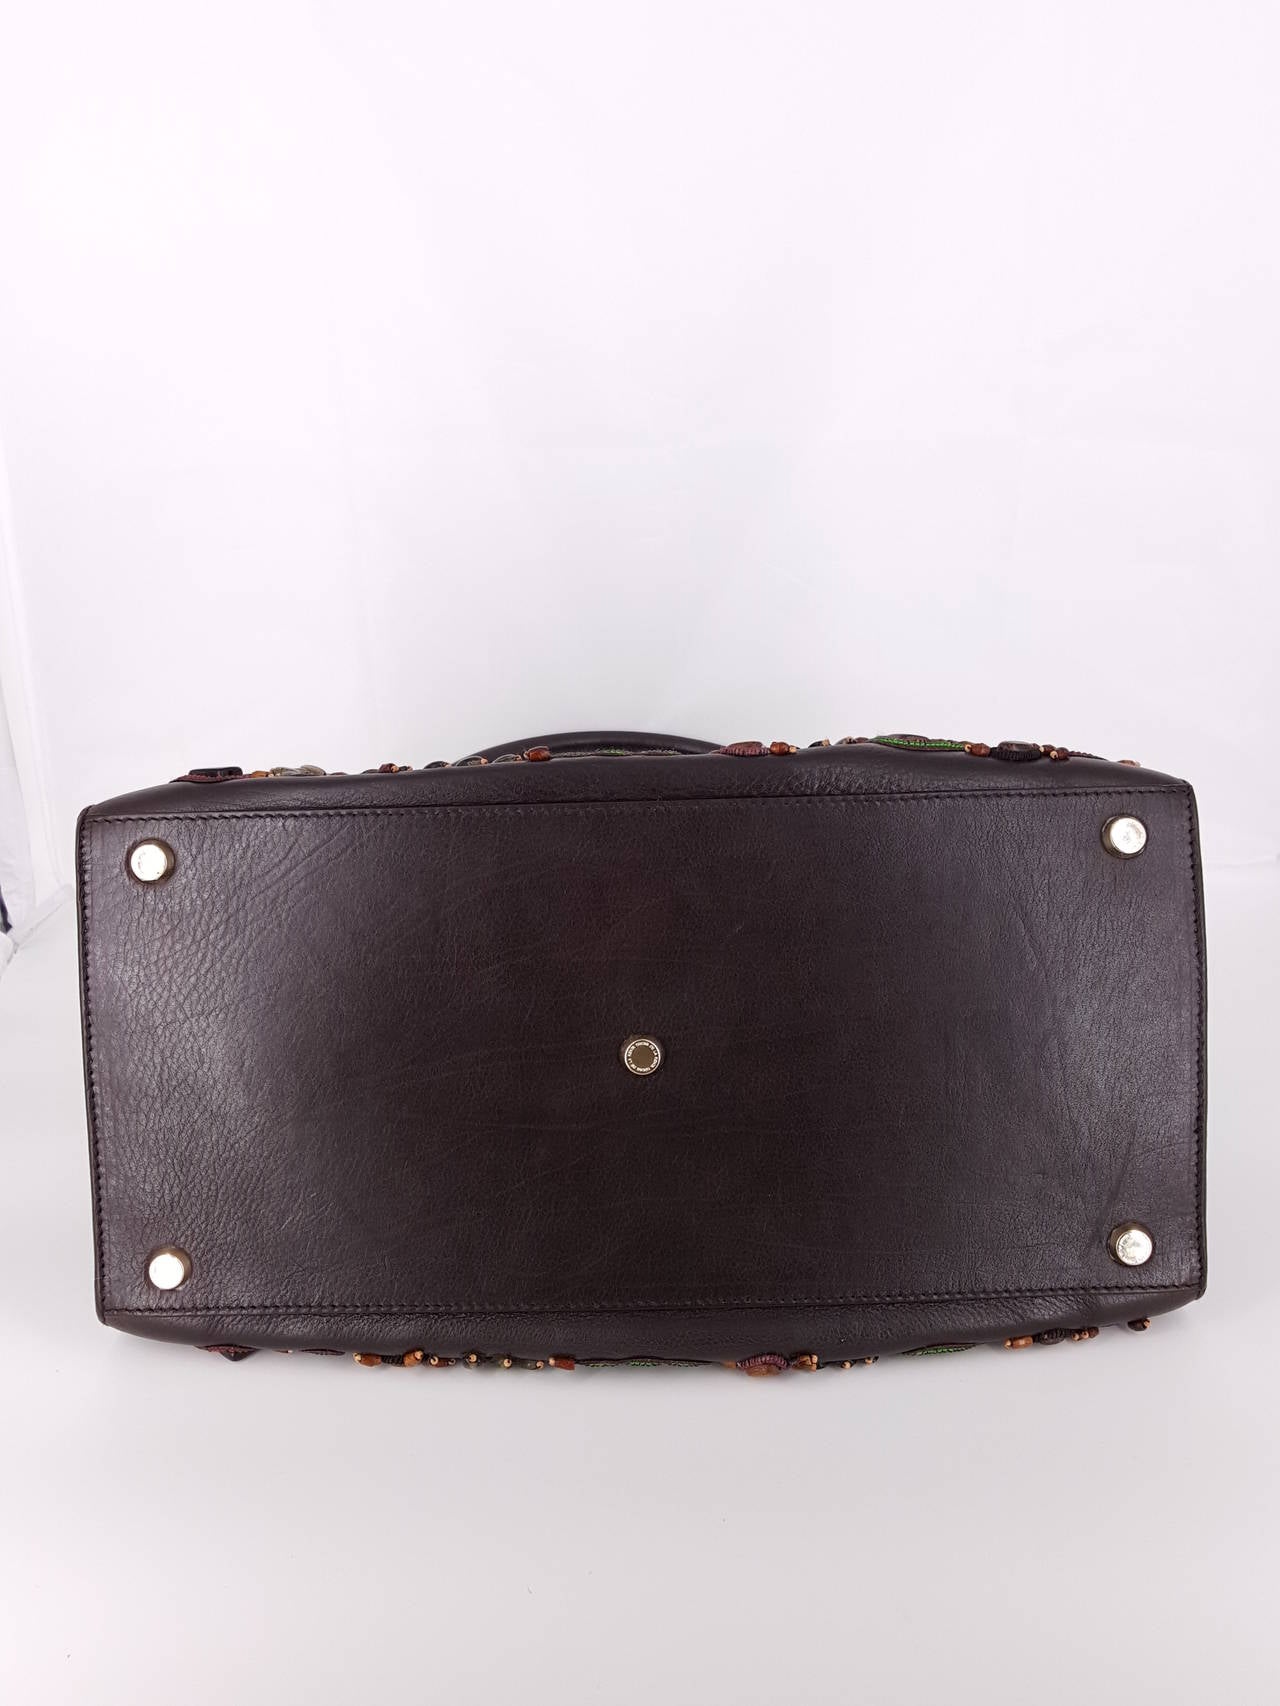 Black Oscar De La Renta Brown Top Handle Bag With Stone Embellishments For Sale